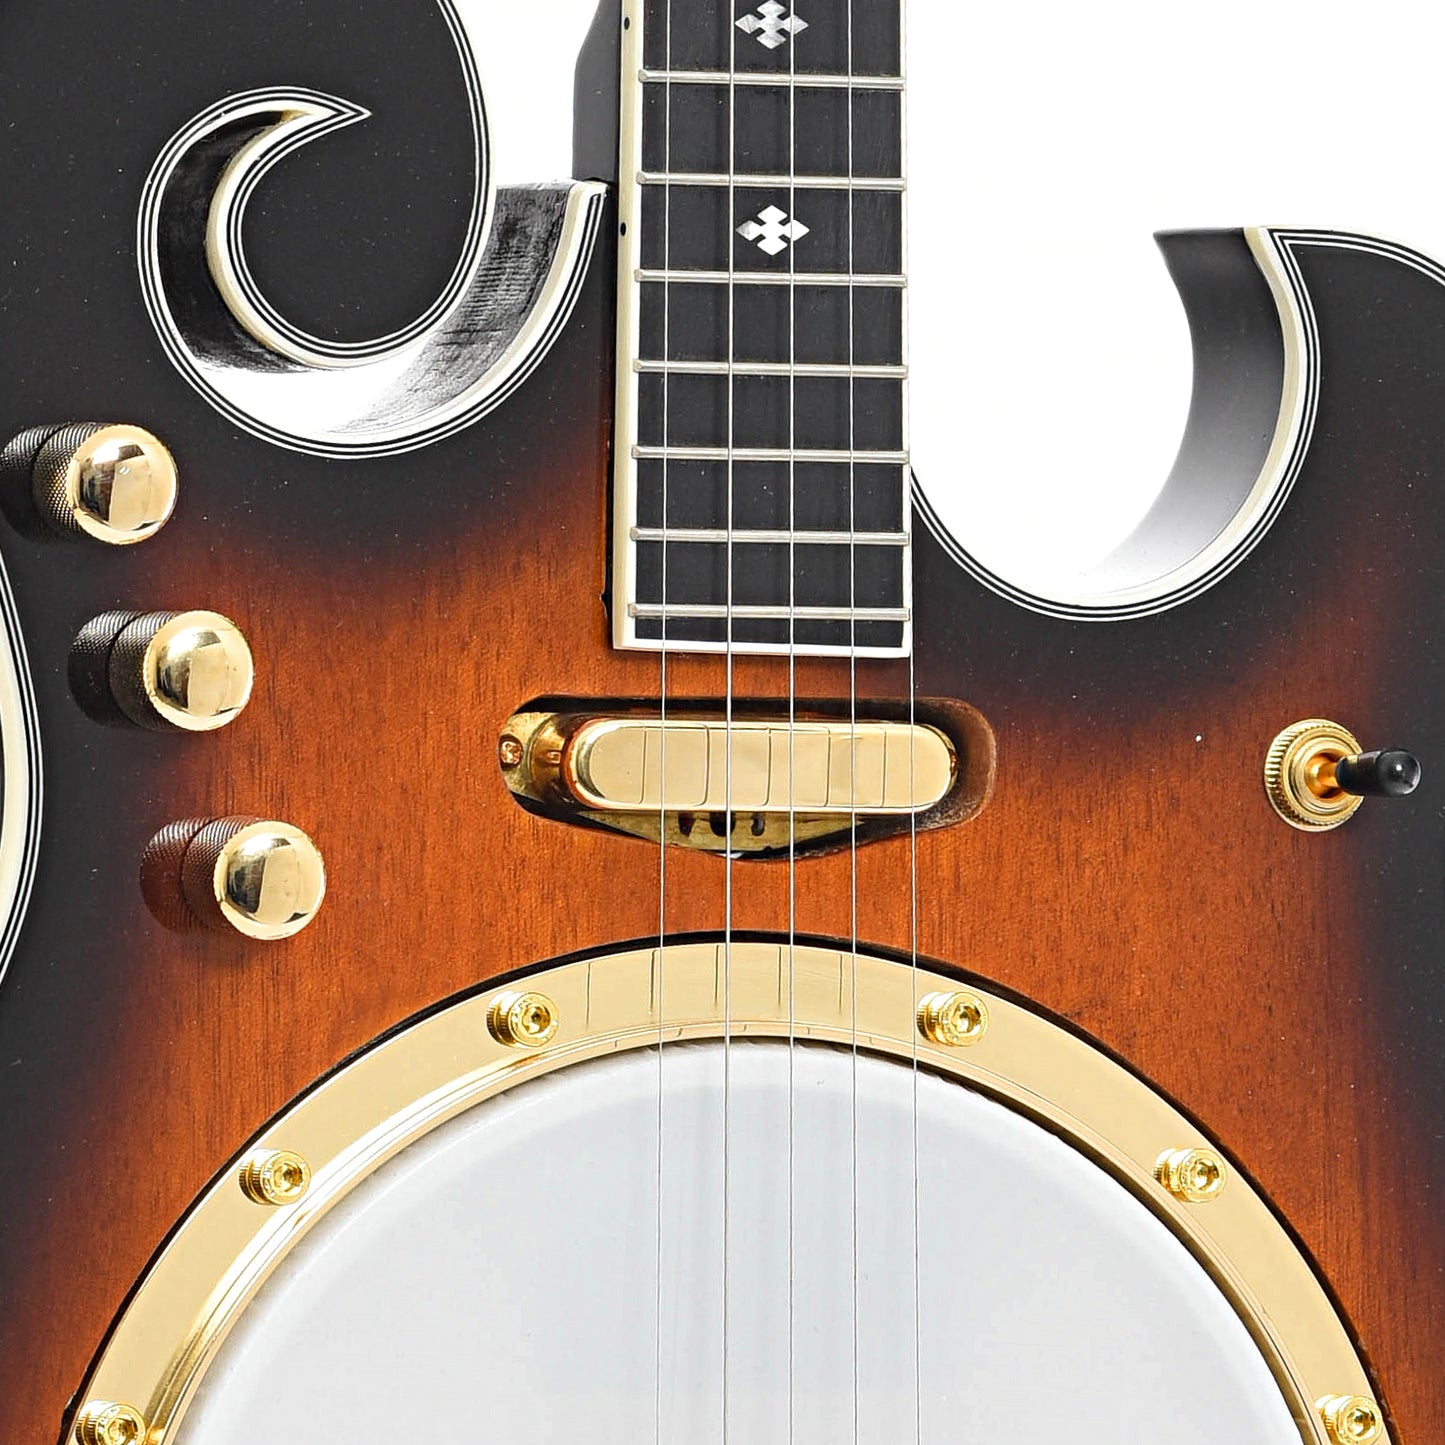 Pickup of Gold Tone EBM-5 Electric 5-String Banjo (recent)